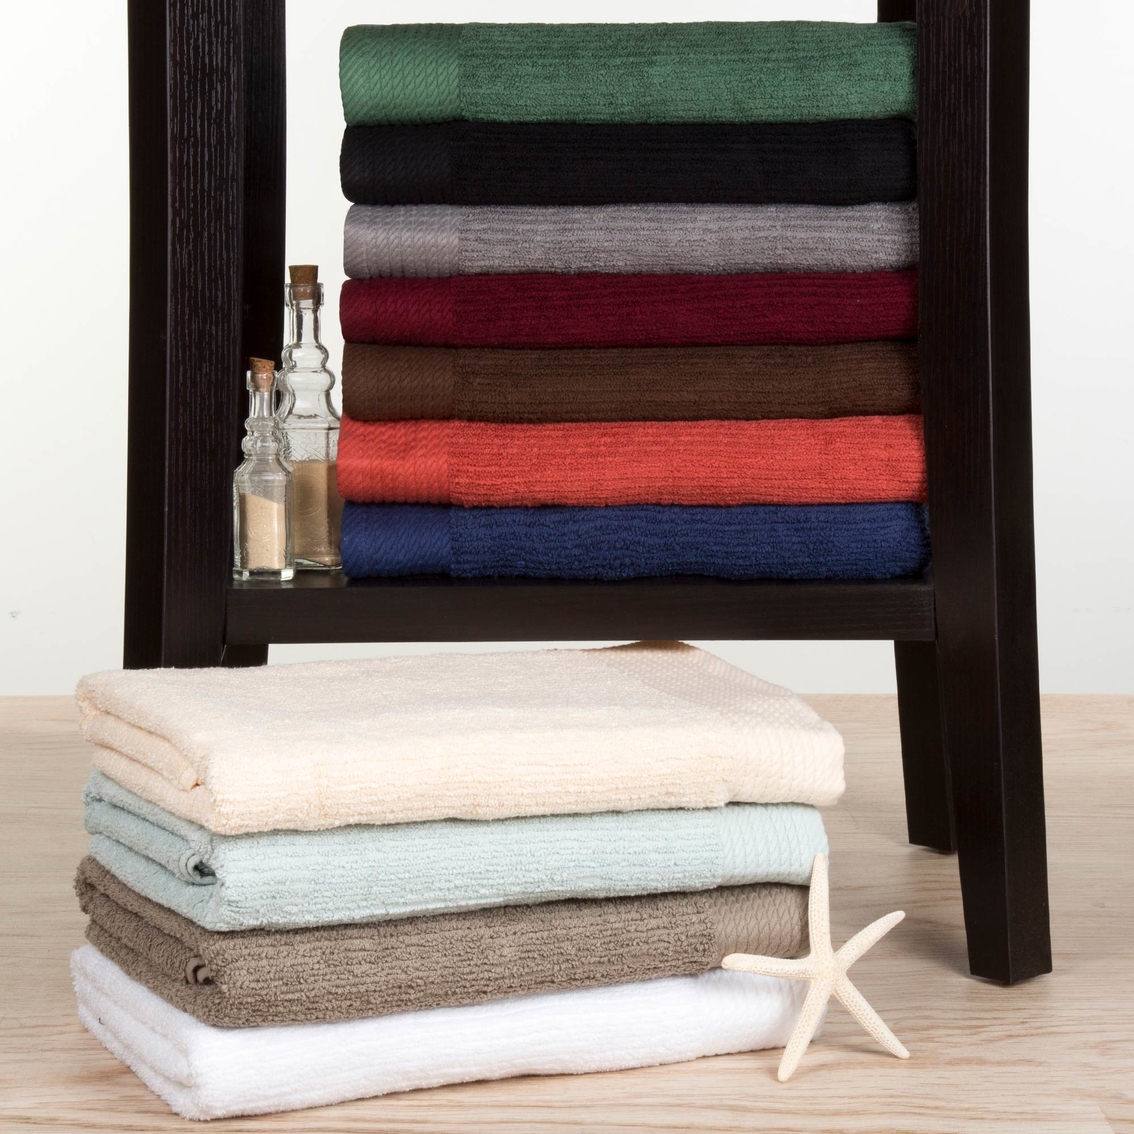  Lavish Home 100 Percent Cotton Towel Set, Zero Twist, Soft and  Absorbent 6 Piece Set With 2 Bath Towels, 2 Hand Towels and 2 Washcloths  (Brick) : Home & Kitchen